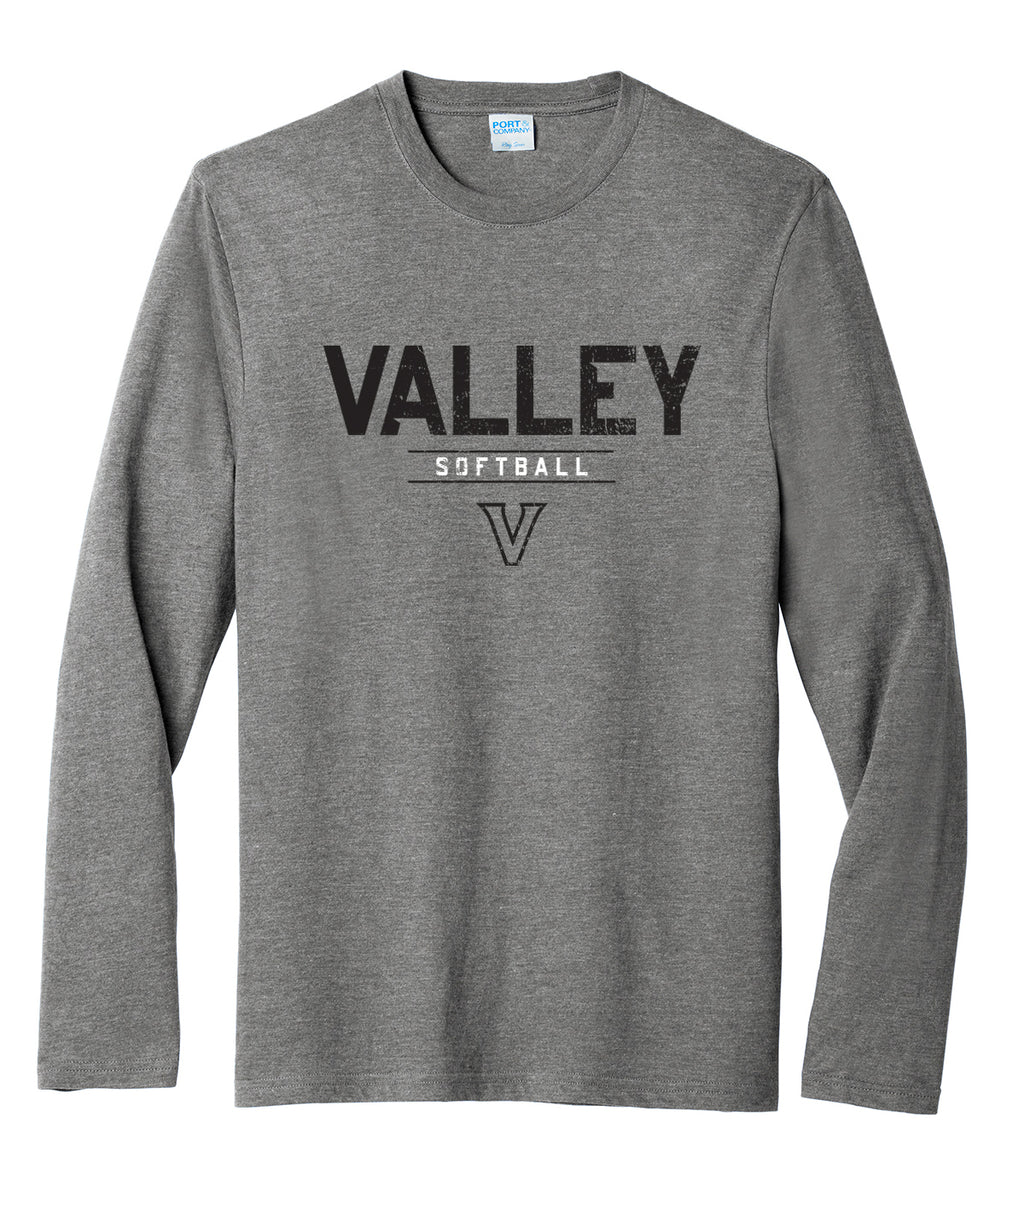 Valley Softball Long-Sleeve Tee